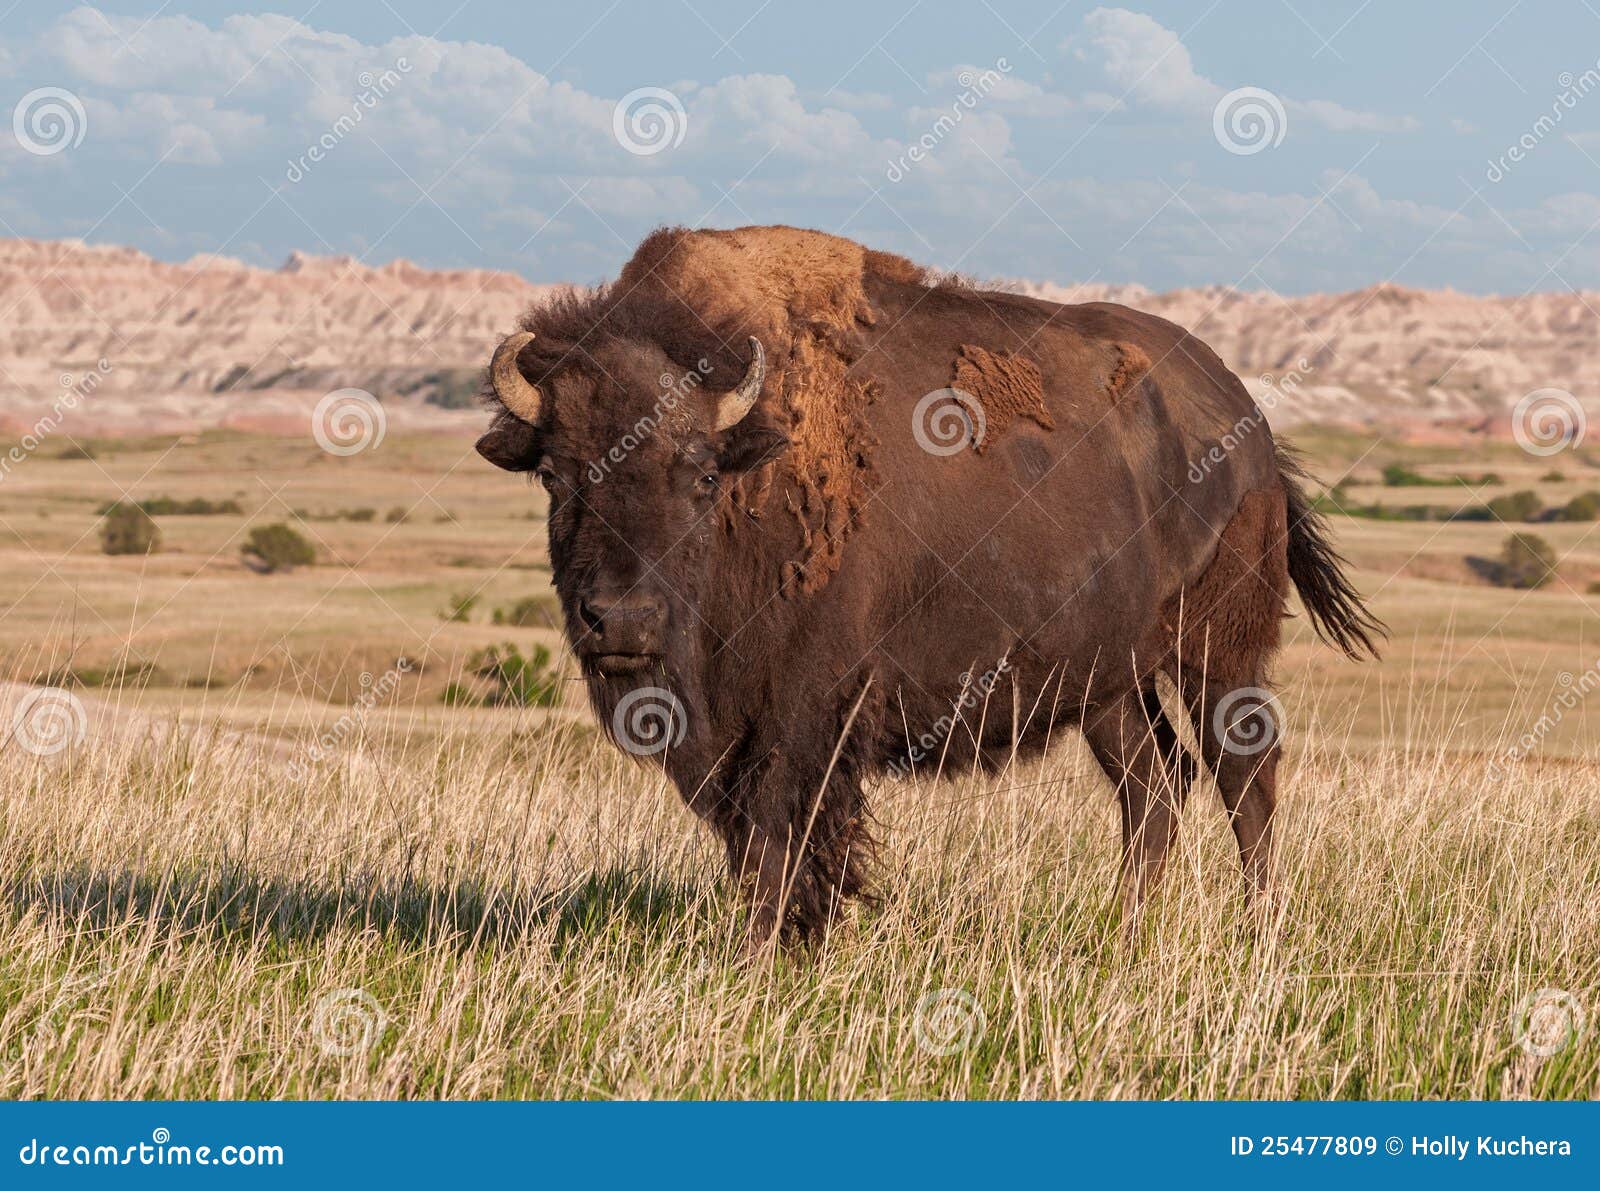 american bison bull in badlands of south dakota